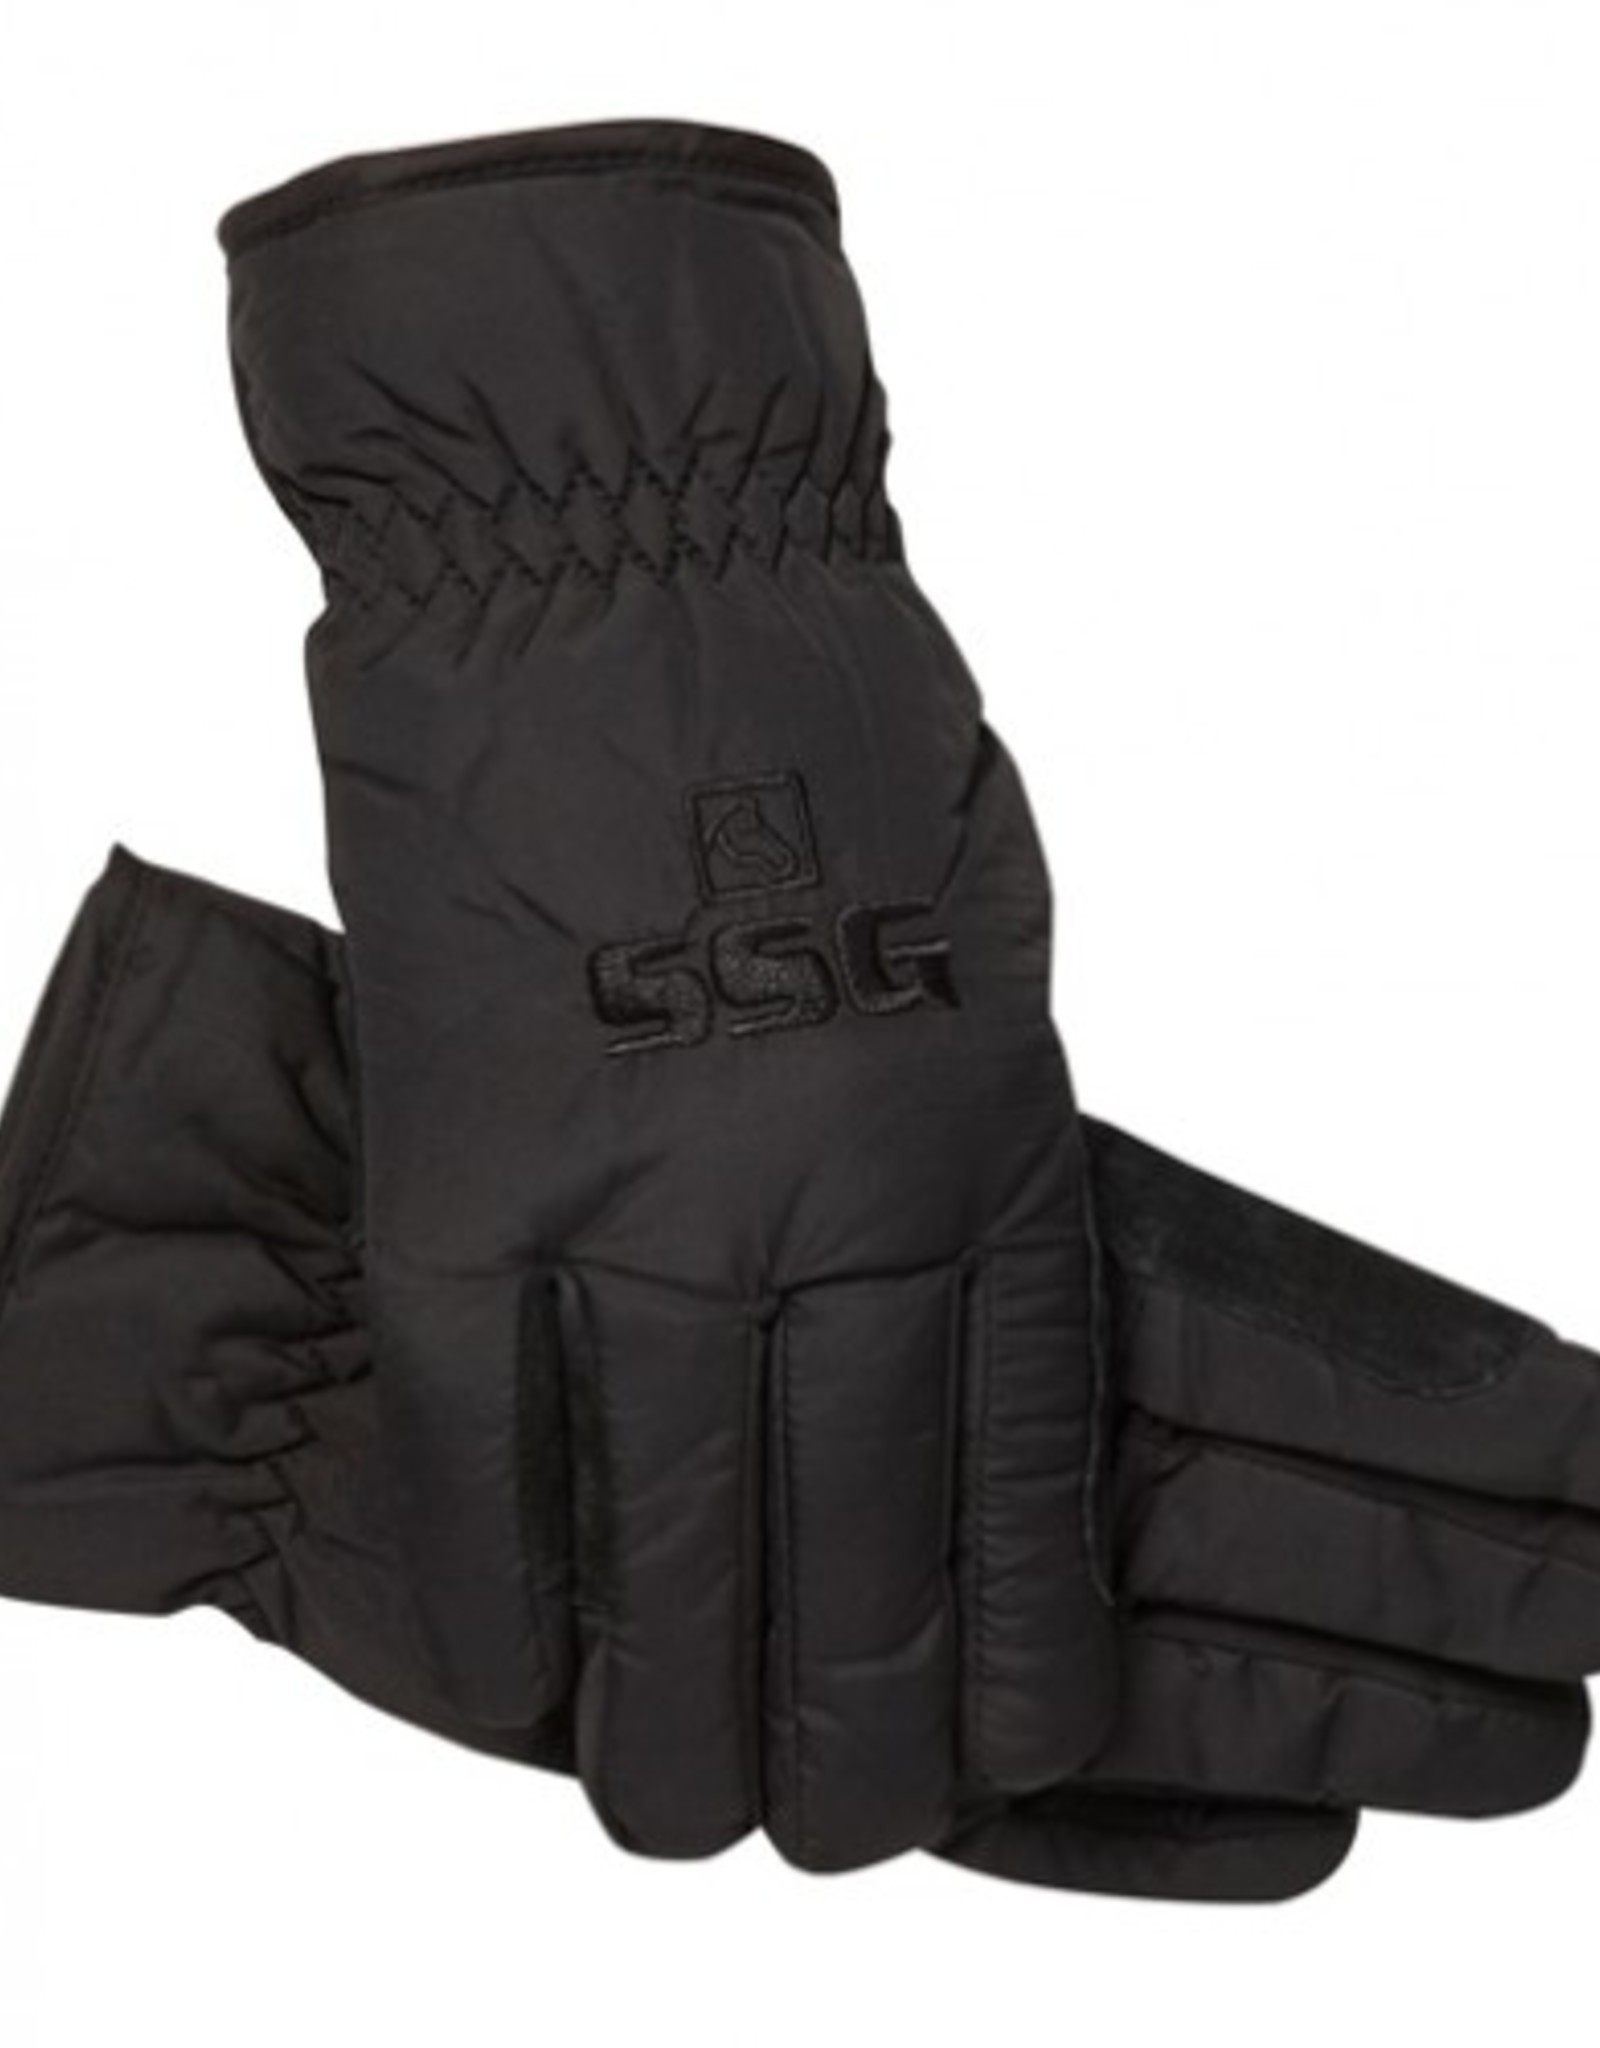 SSG SSG Econo Winter Riding Gloves - Green - Large